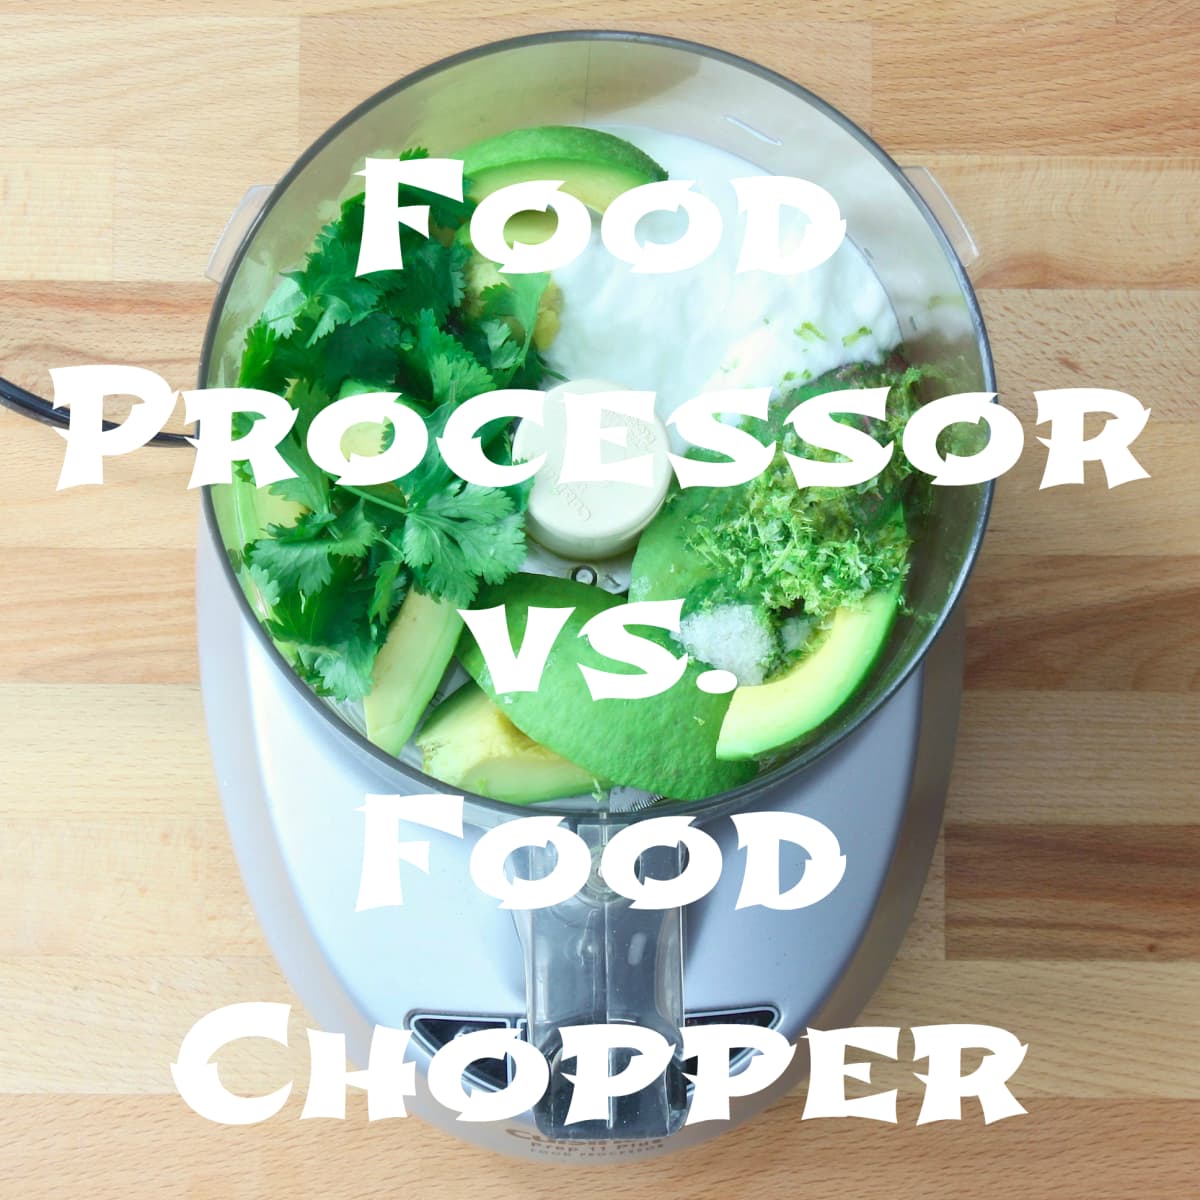 Choppers + Food Processors